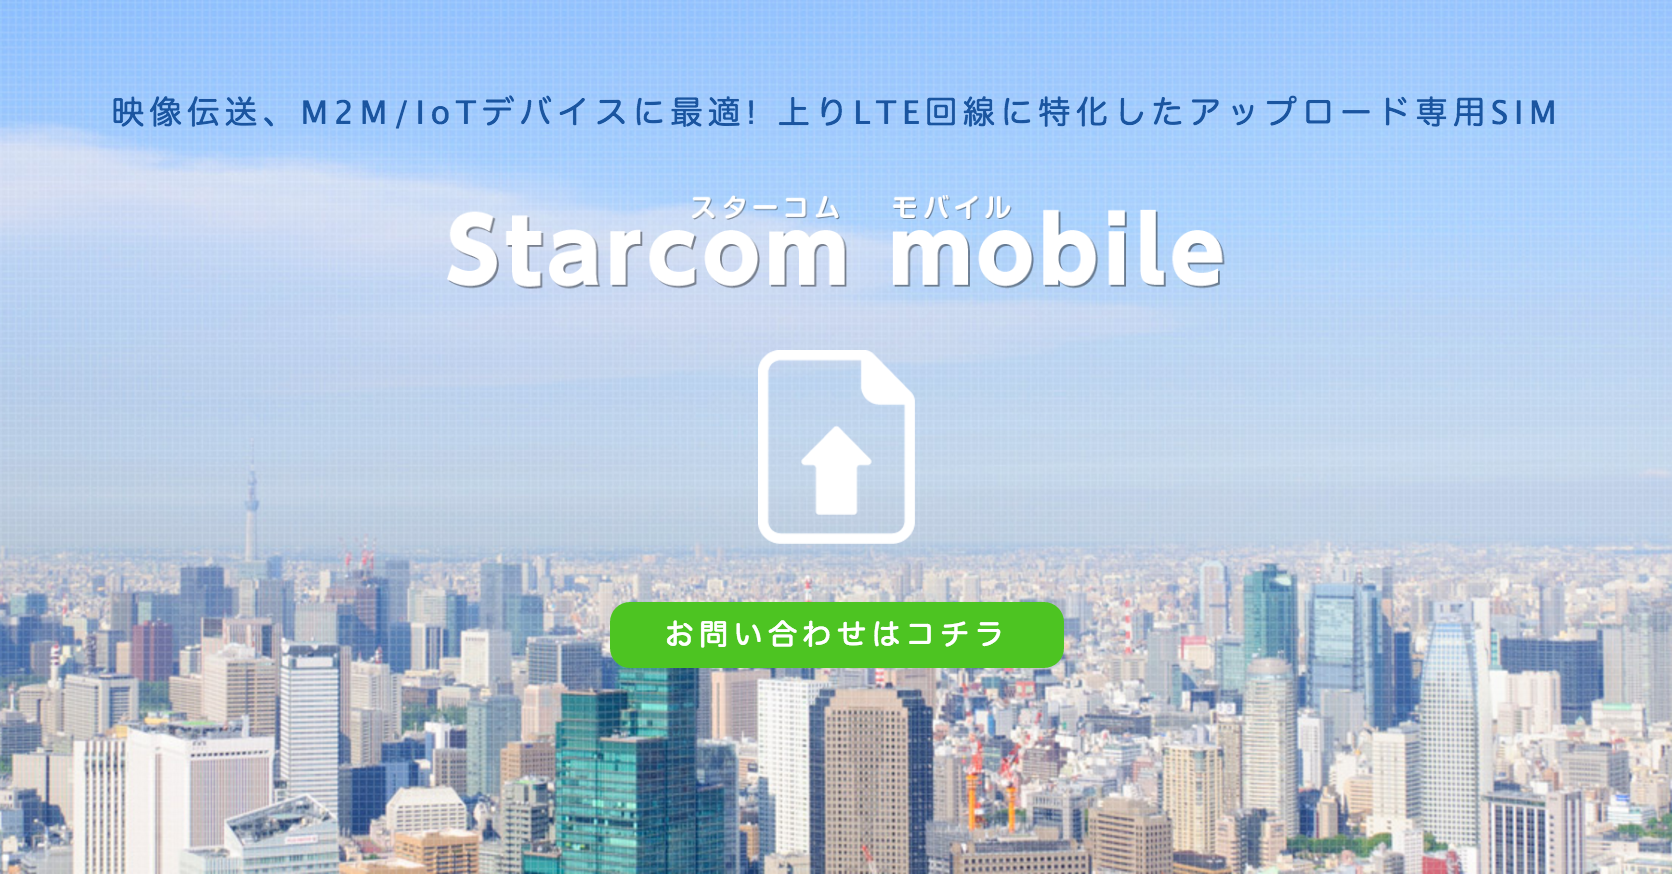 Starcom mobile